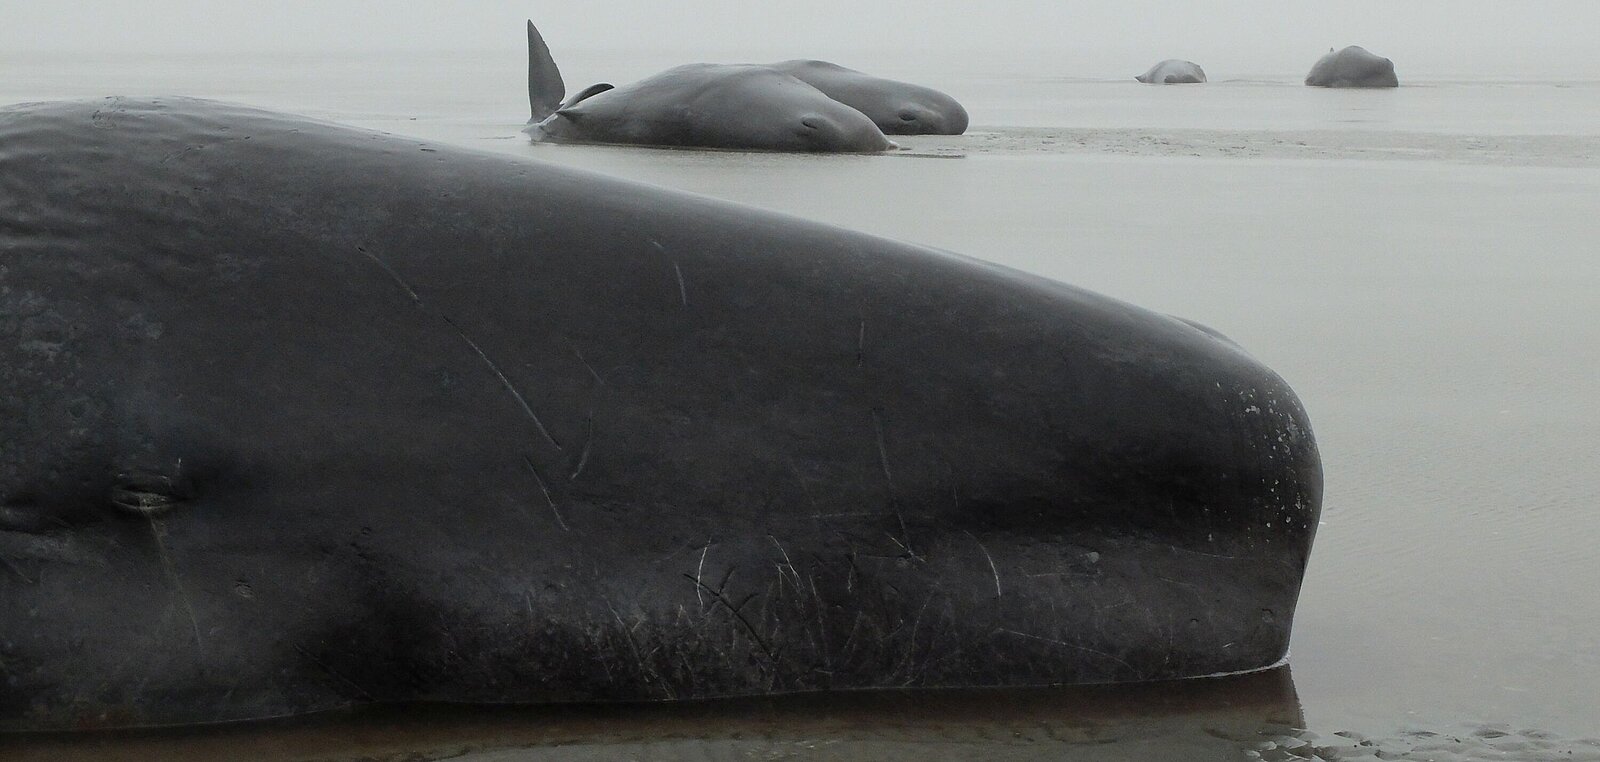 Some stranded sperm whales